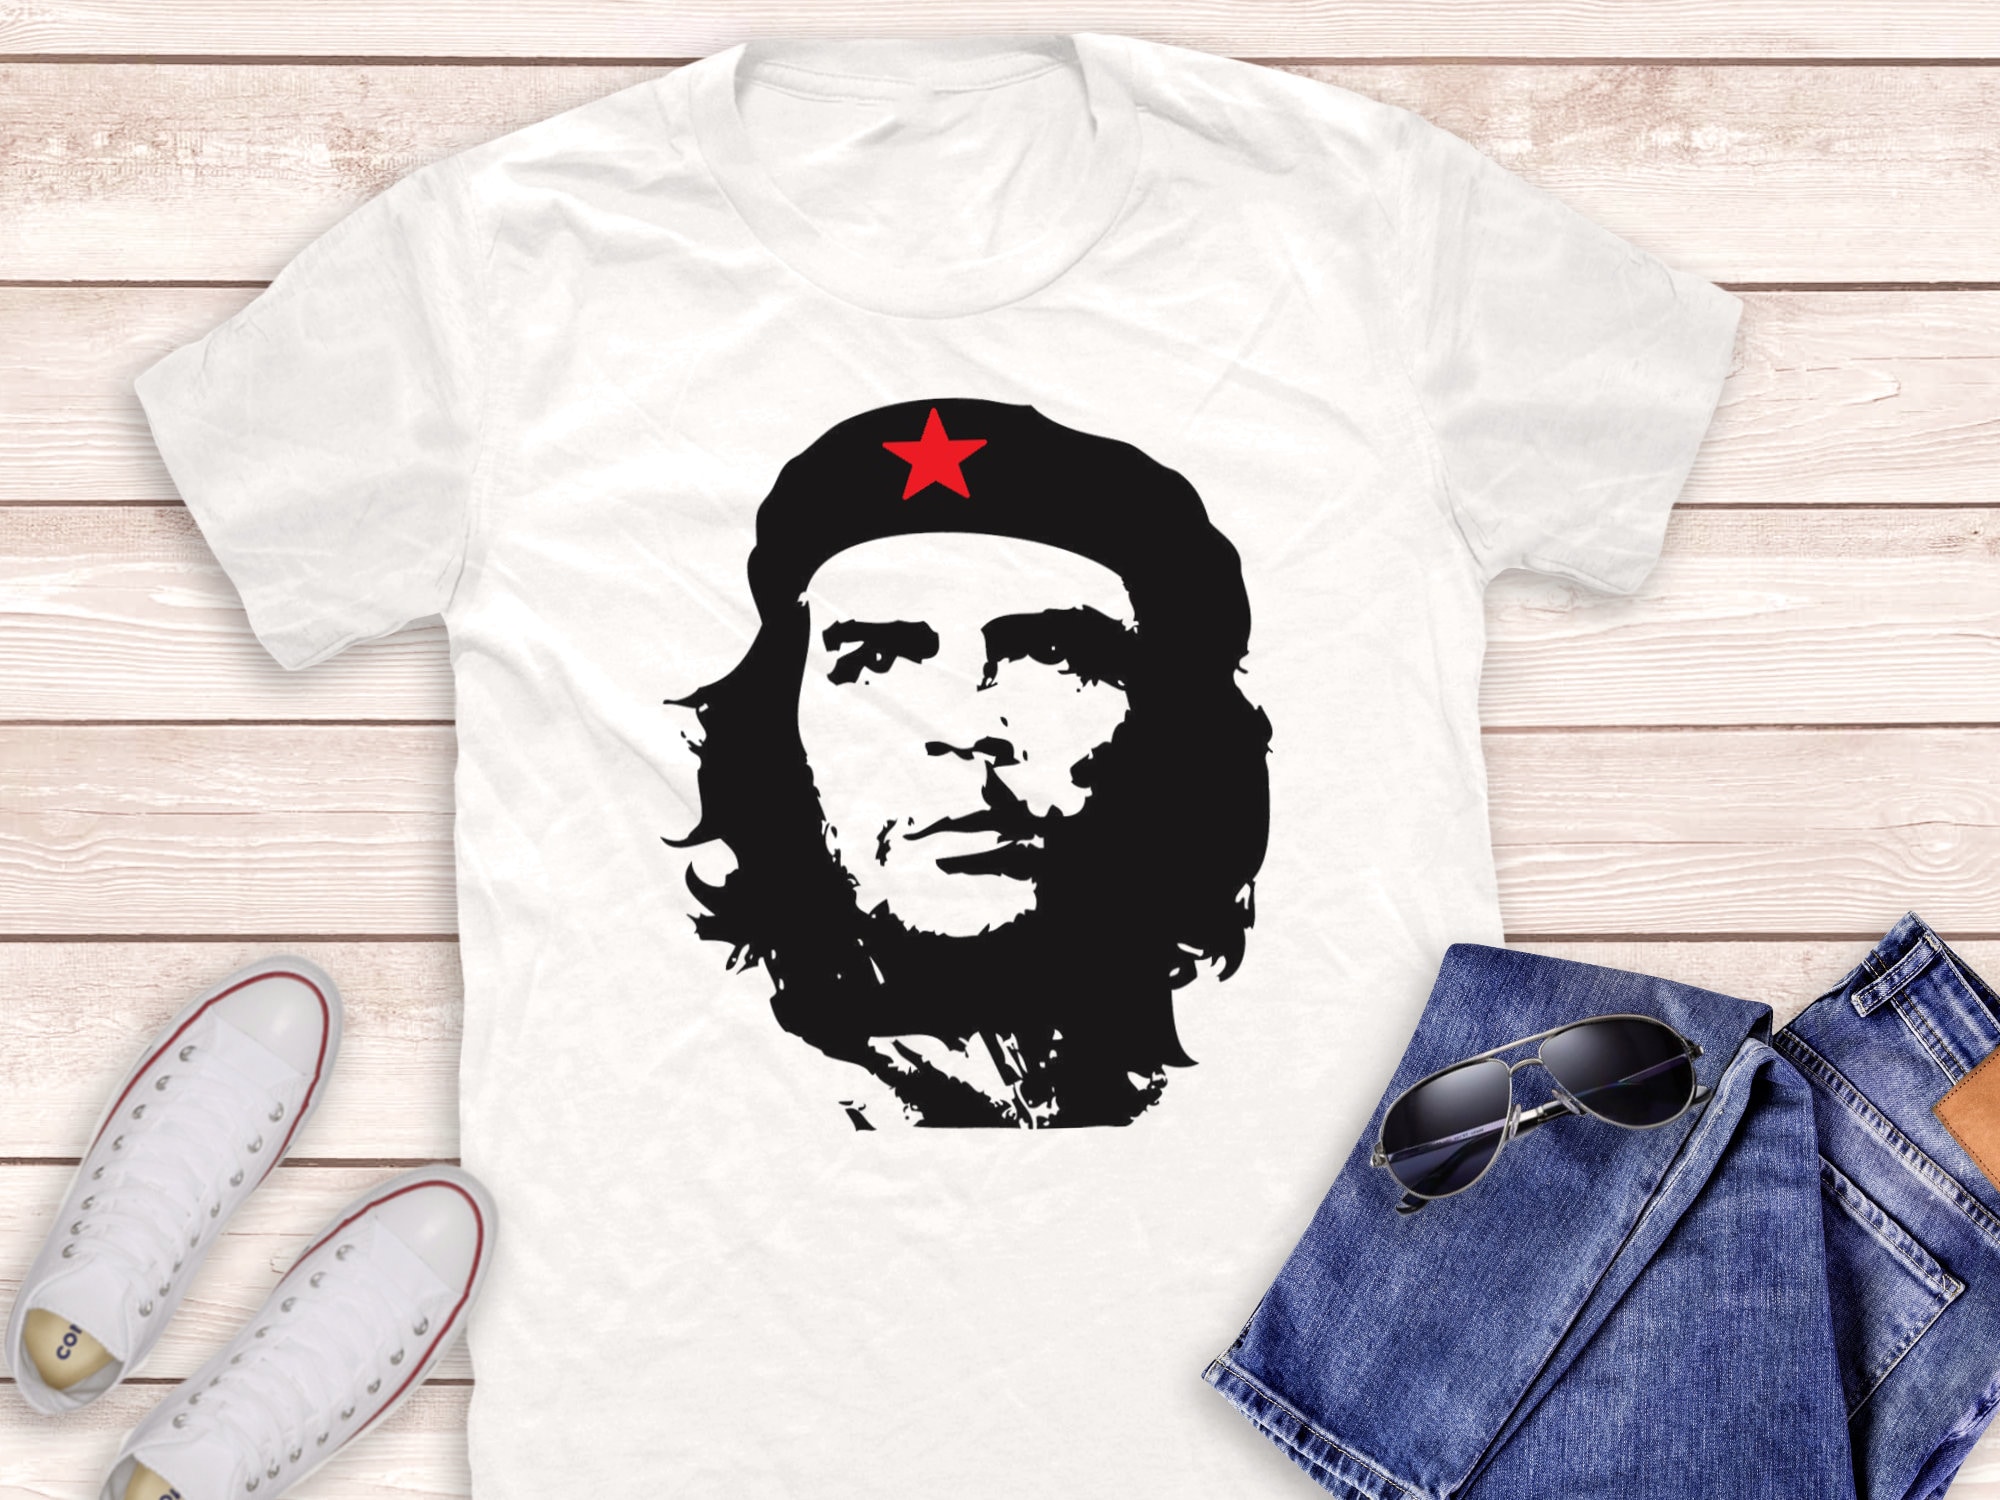 Che Guevara glowing red short sleeve black T-shirt –